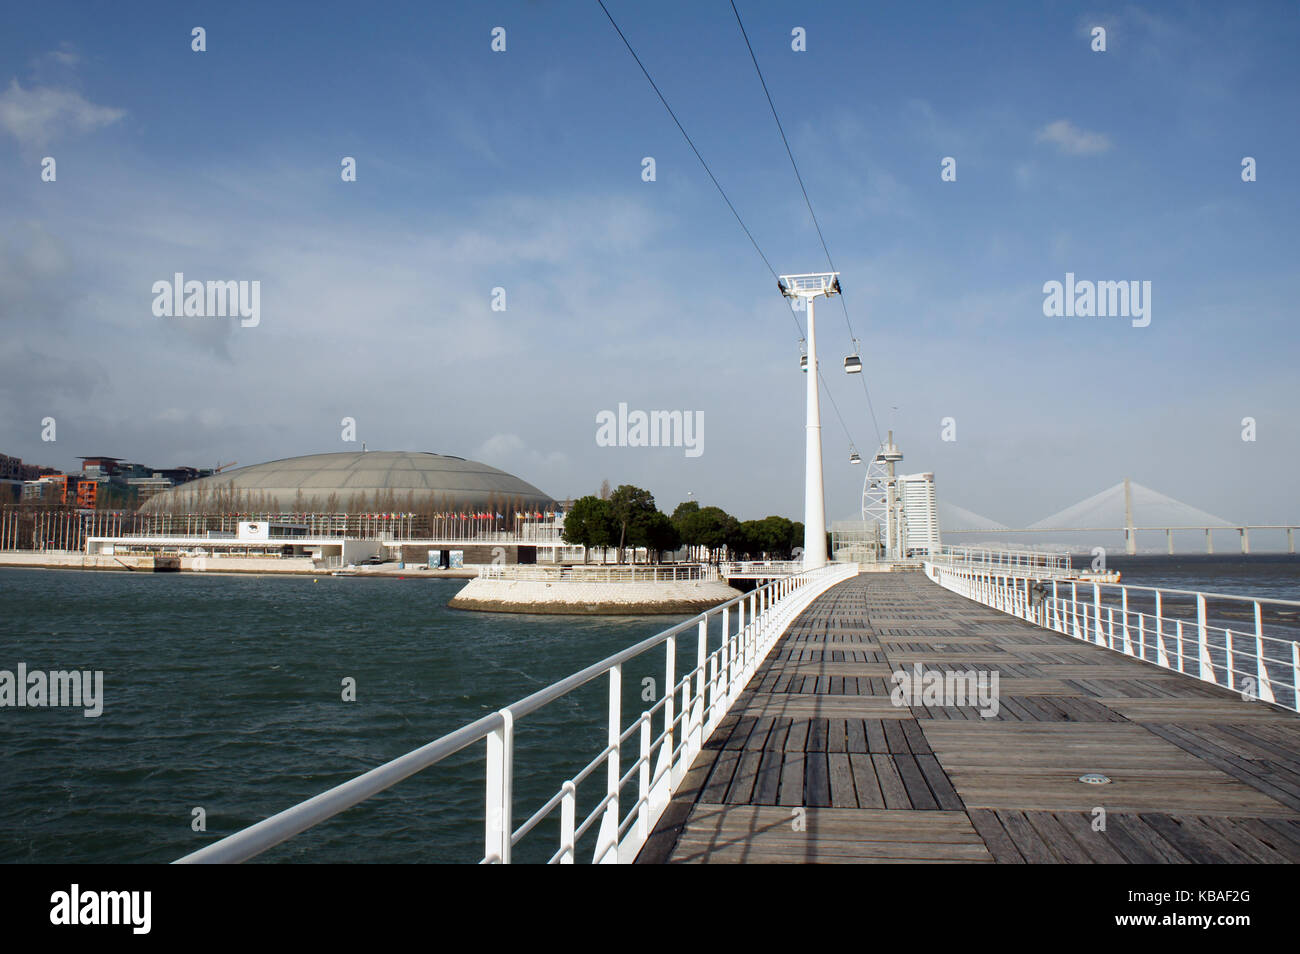 Teleférico de Lisboa (cable car tramway) and oceanarium / aquanarium on the seaside marina in Lisbona, Portugal Stock Photo